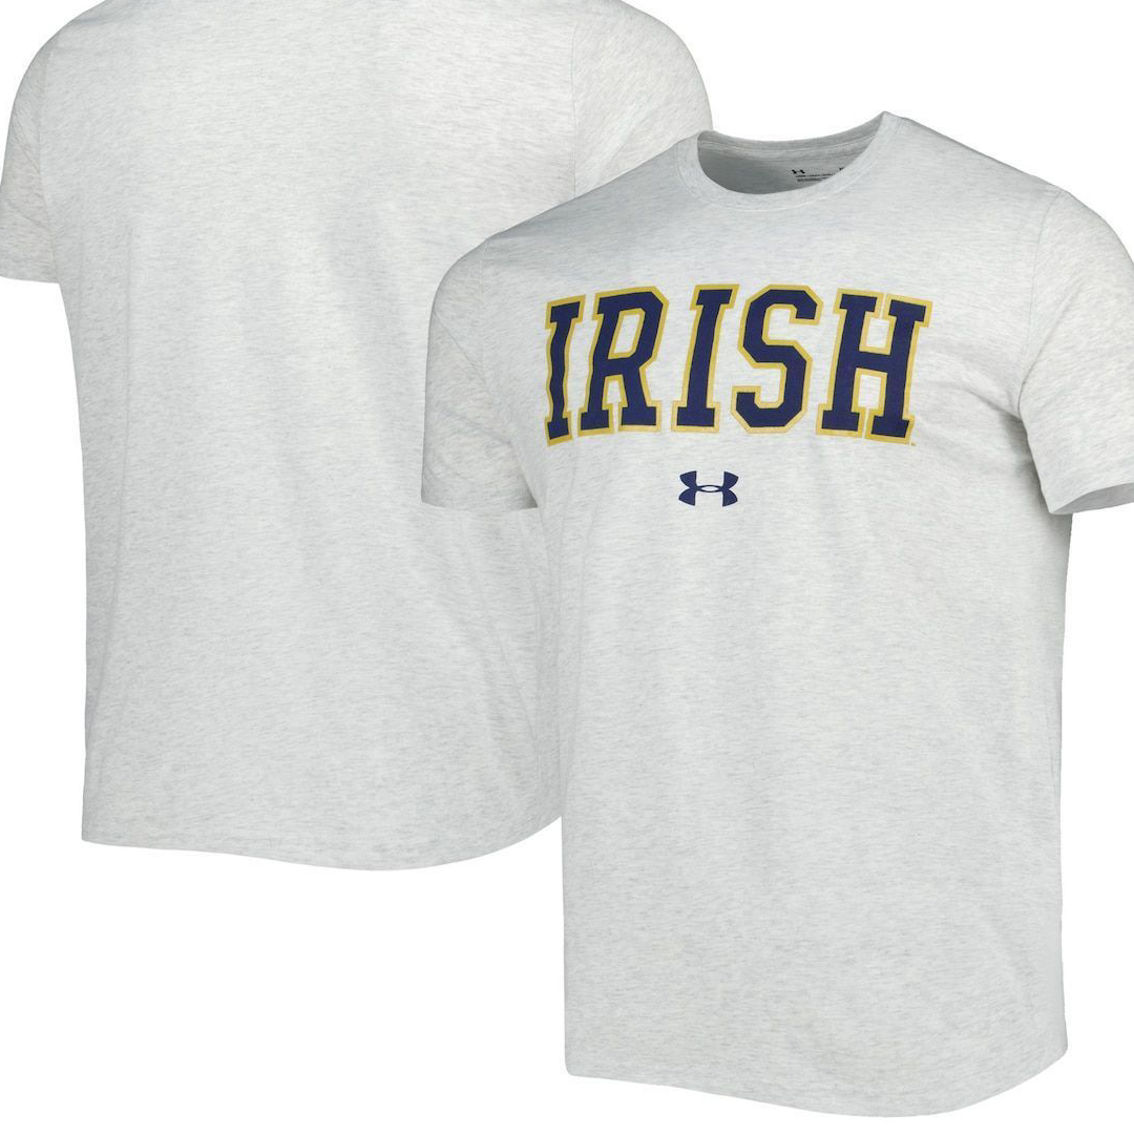 Under Armour Men's Heathered Gray Notre Dame Fighting Irish T-Shirt - Image 1 of 4